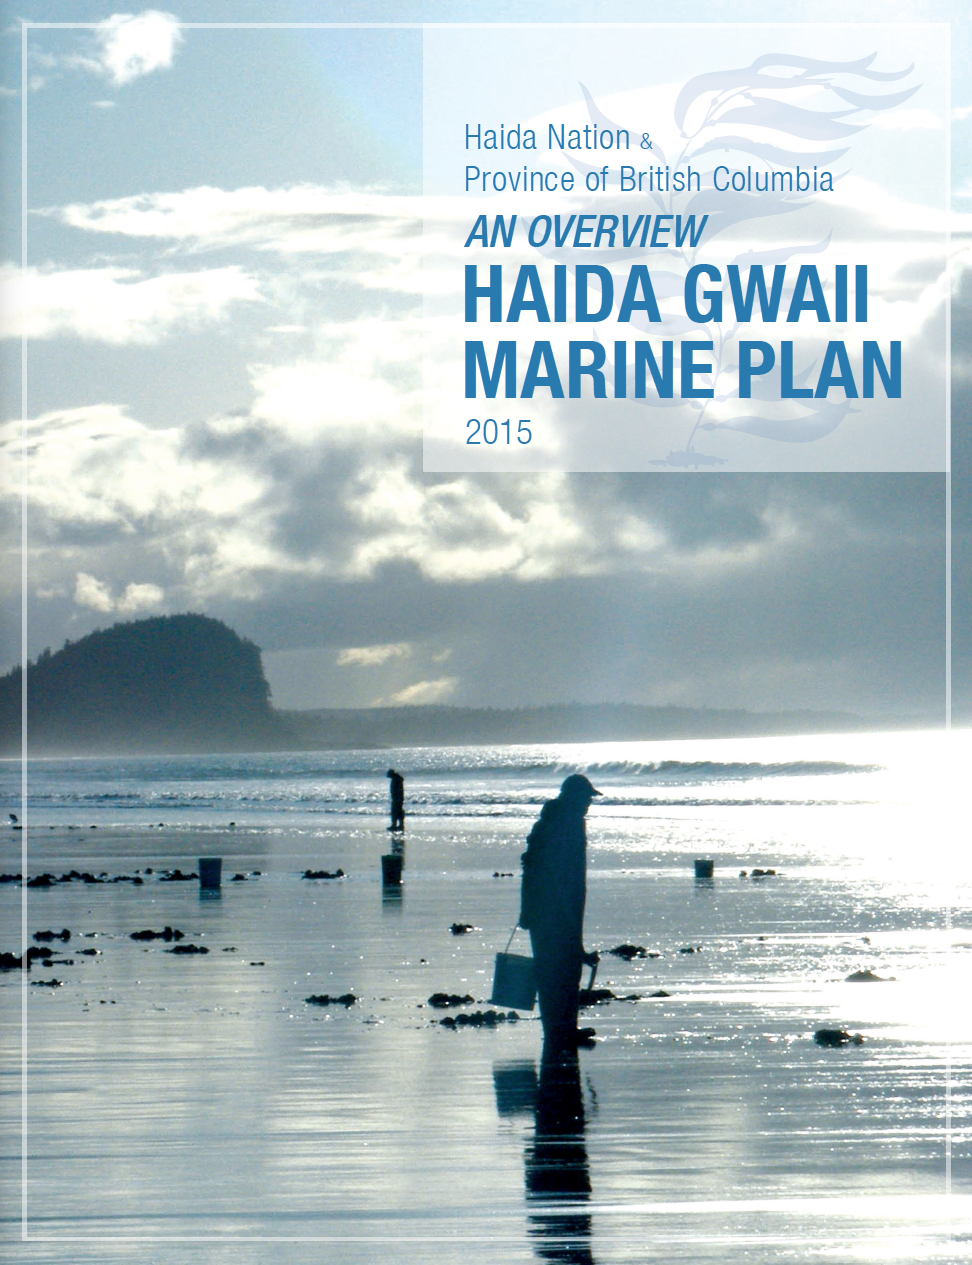 Haida Gwaii Marine Plan Overview